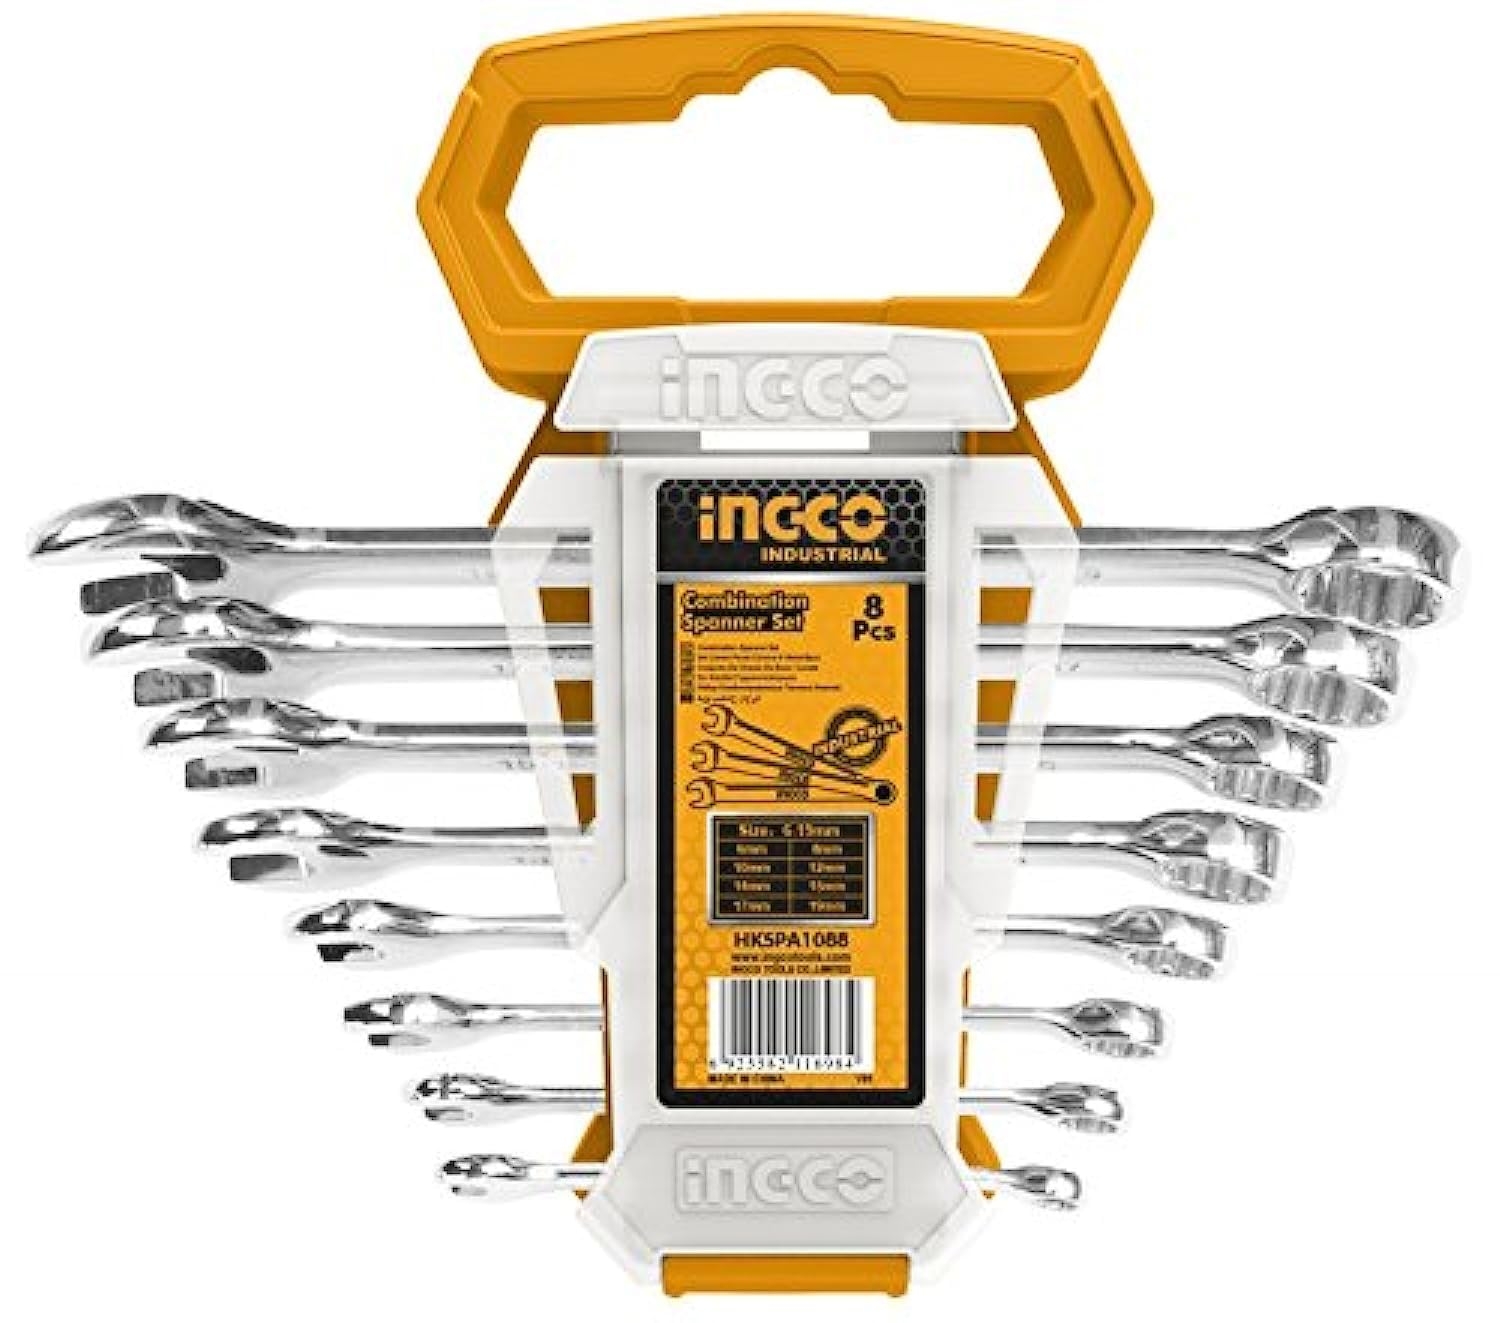 INGCO HKSPA1088 8 PCS Combination Spanner Set | Alloy Steel | Heavy Duty (1 Set)